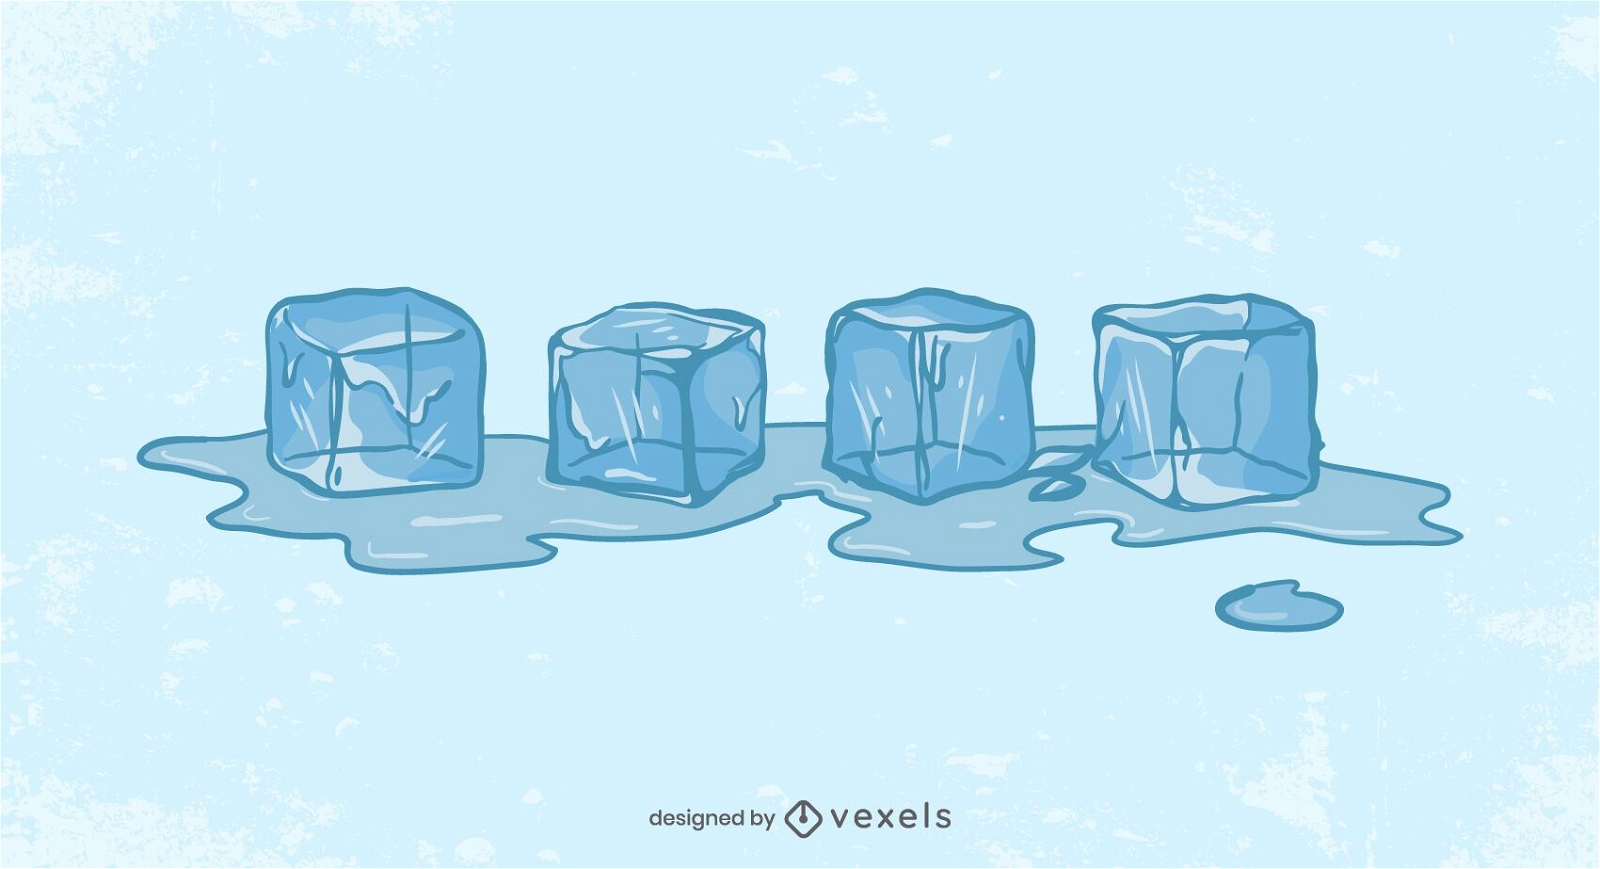 Ice cubes melting illustration design